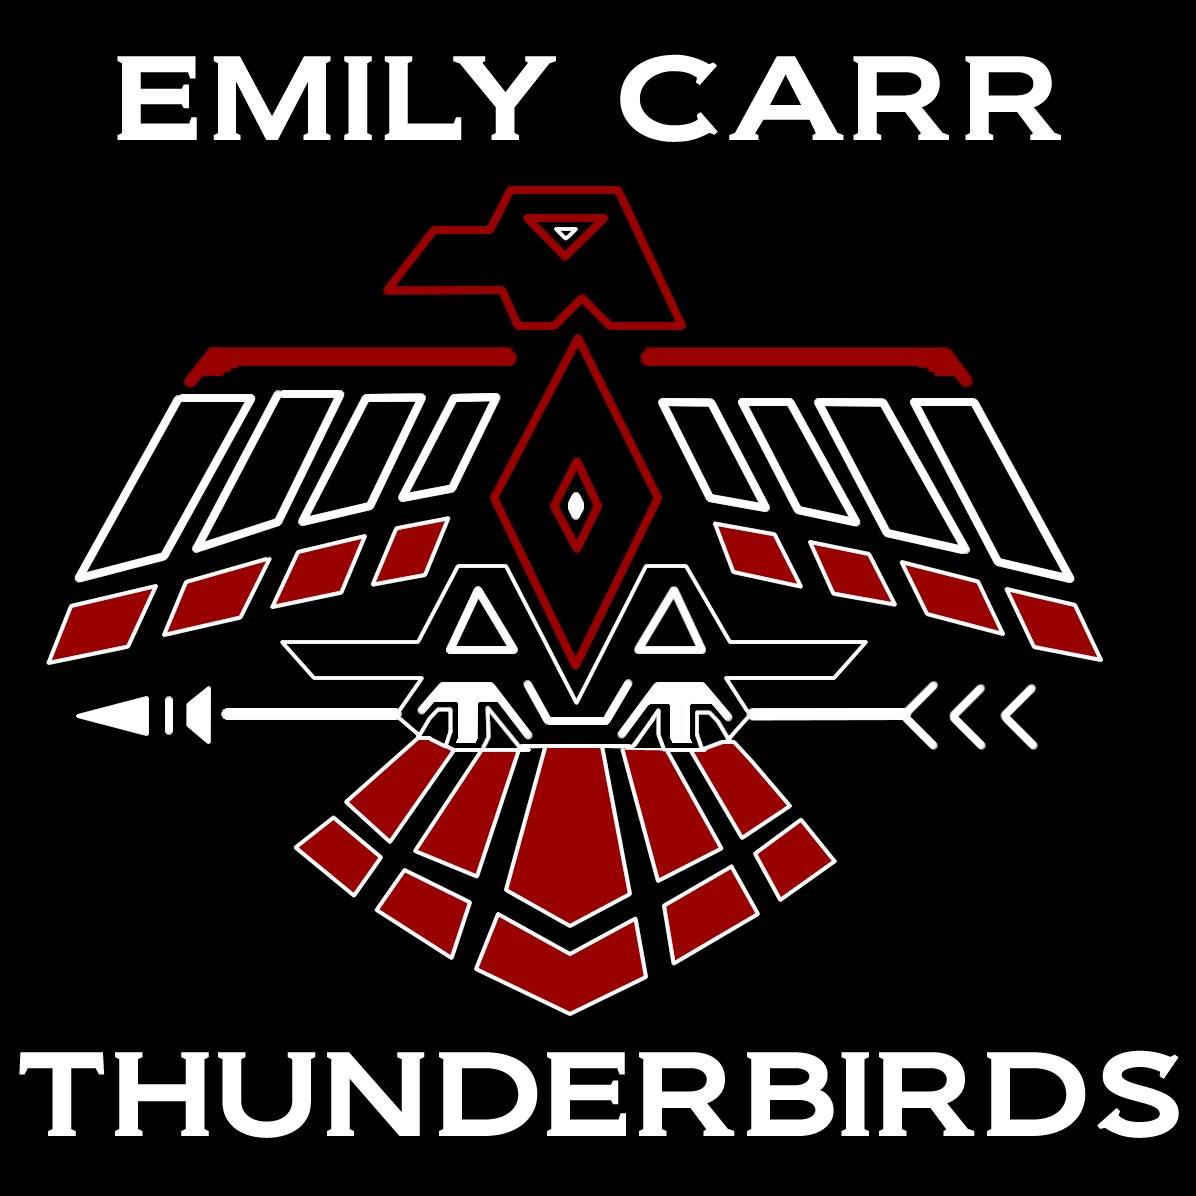 Thunderbirds tweet!